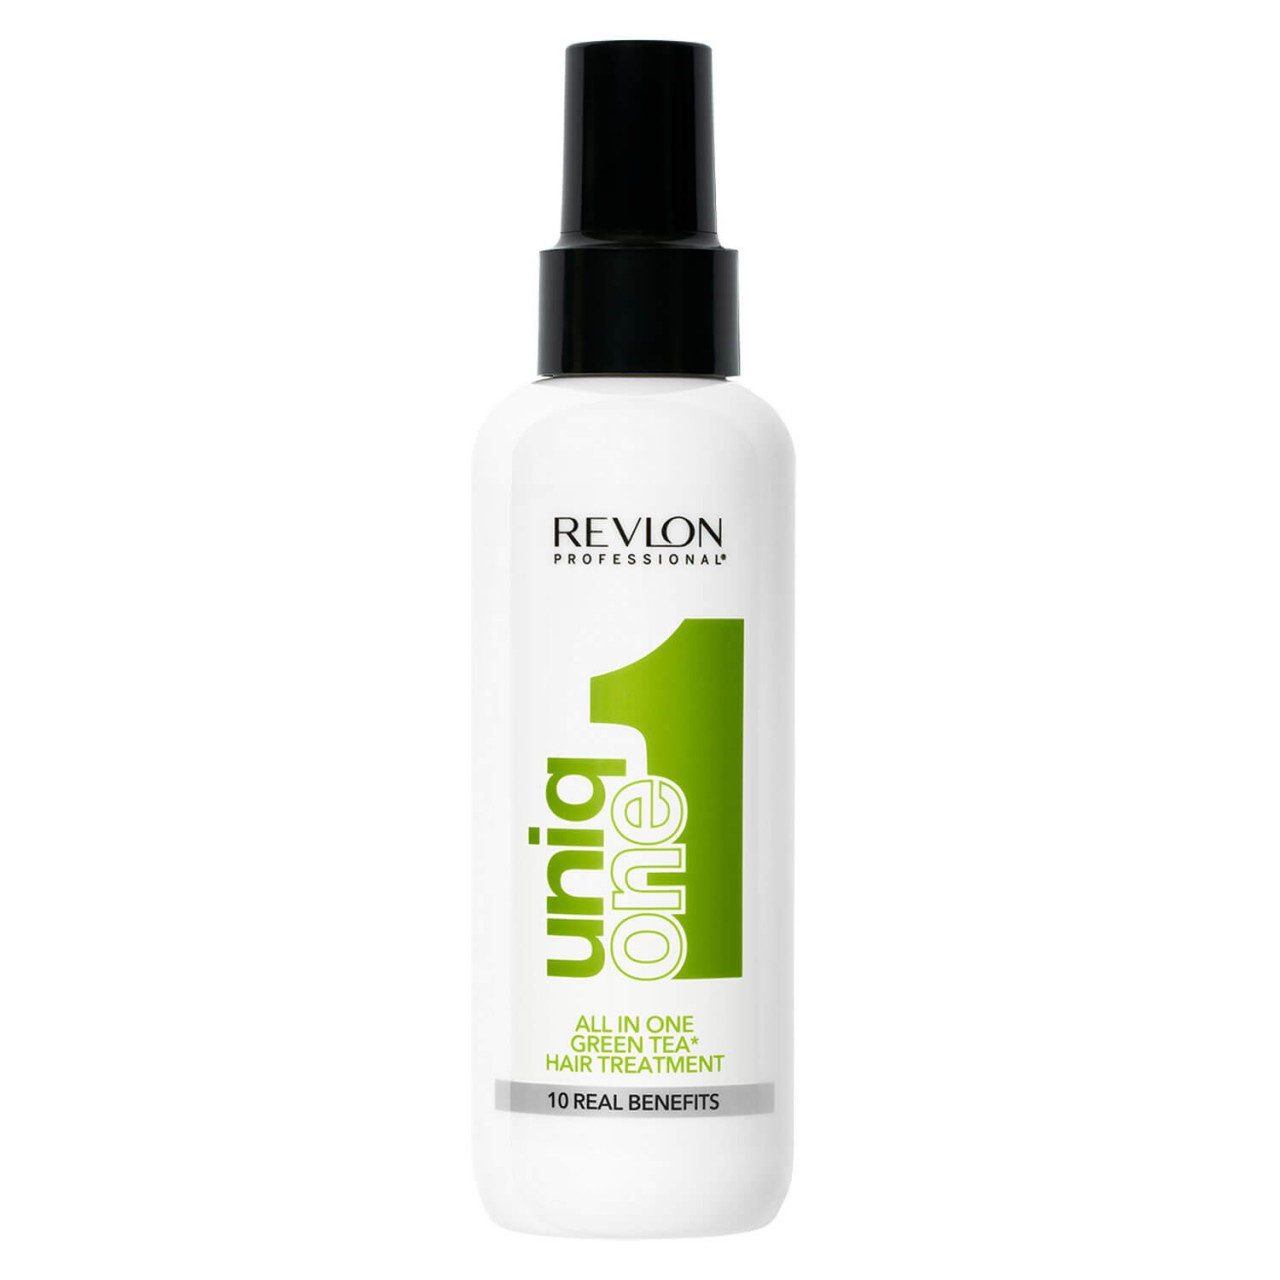 uniq one - All in one Hair Treatment Green Tea von Revlon Professional